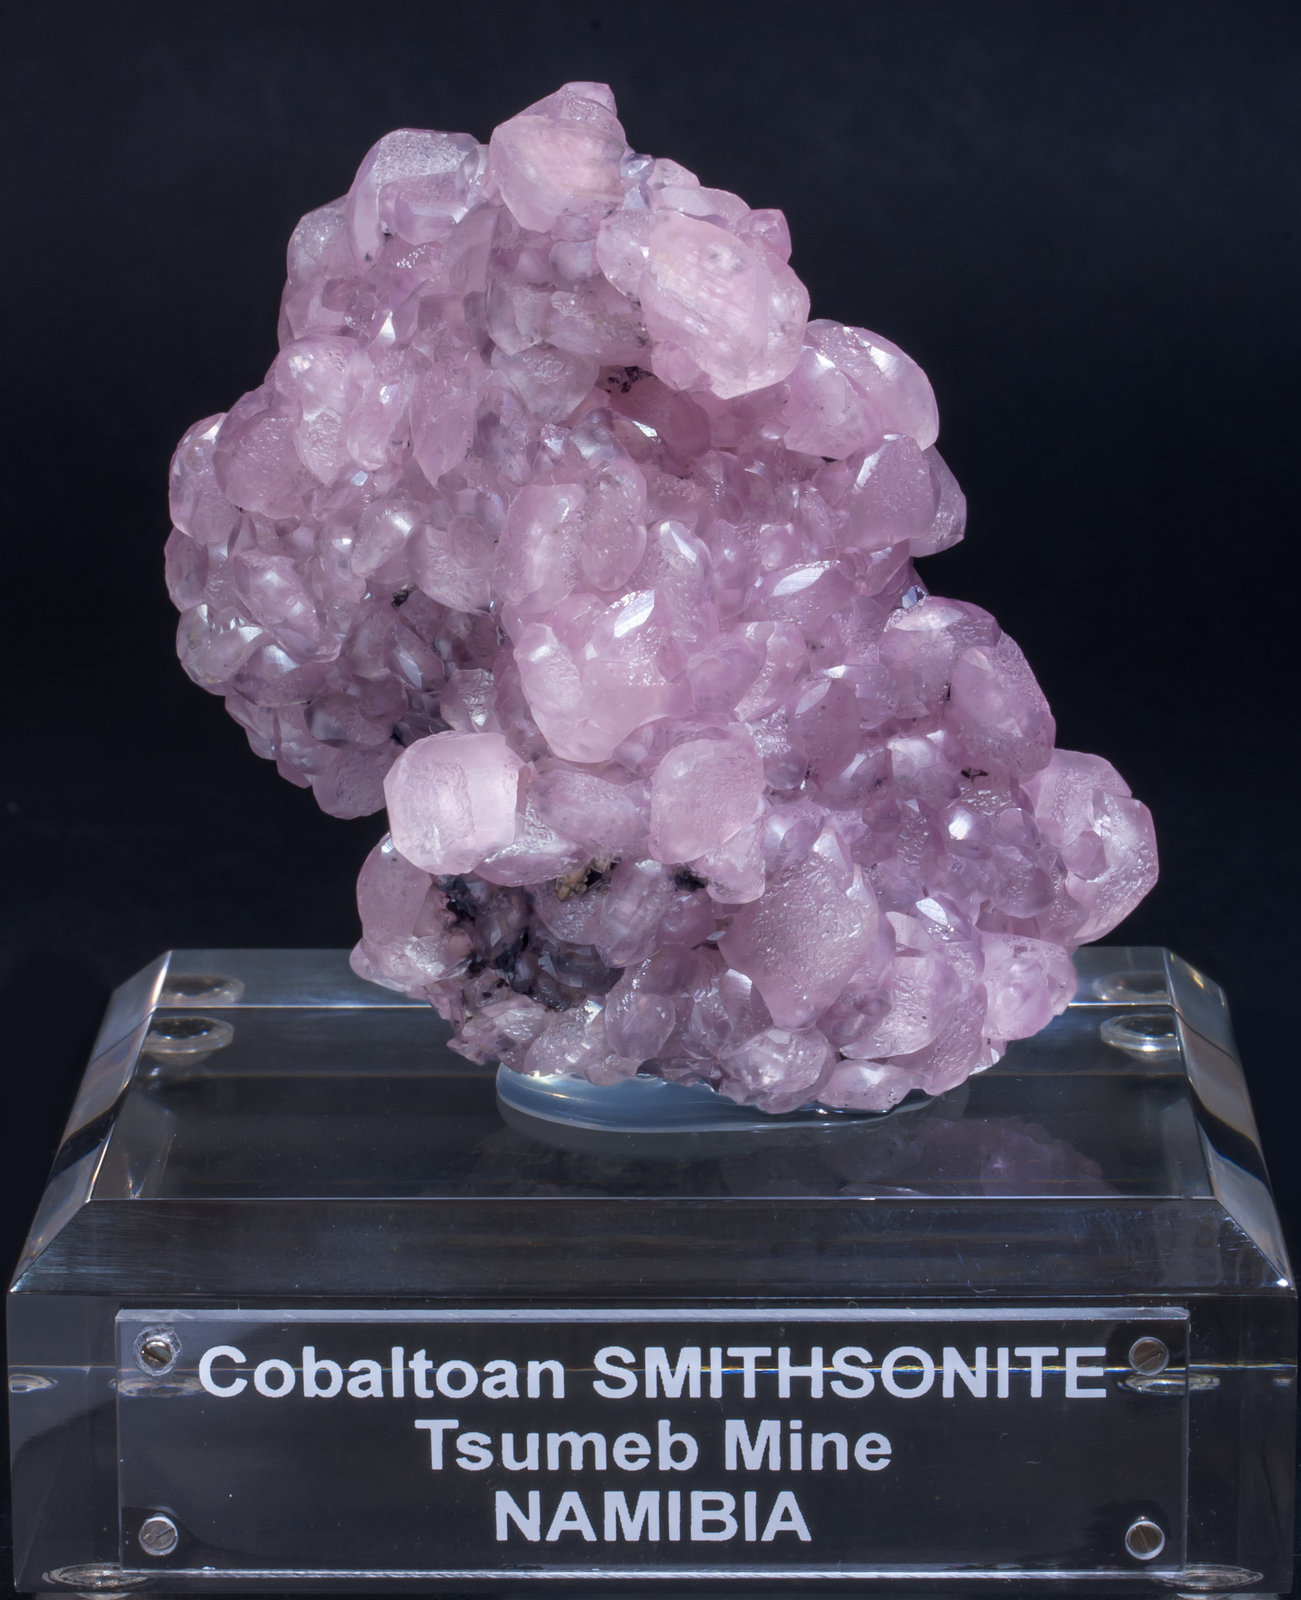 specimens/s_imagesAJ8/Smithsonite_cobaltoan-TR96AJ8f1.jpg